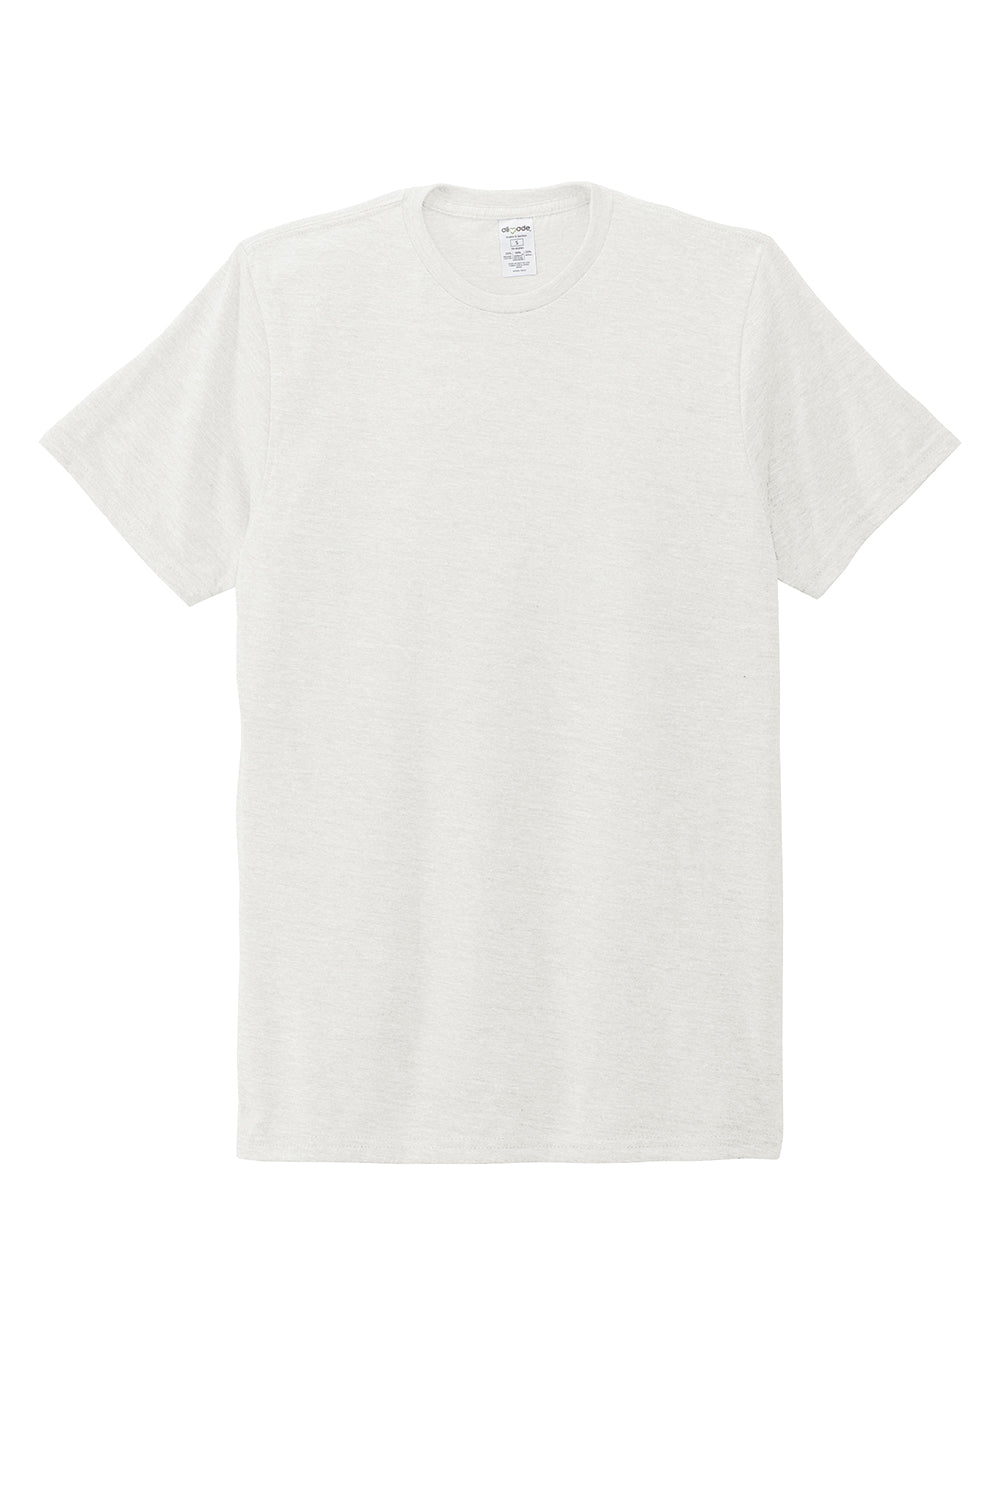 Allmade AL2004 Mens Short Sleeve Crewneck T-Shirt Fairly White Flat Front